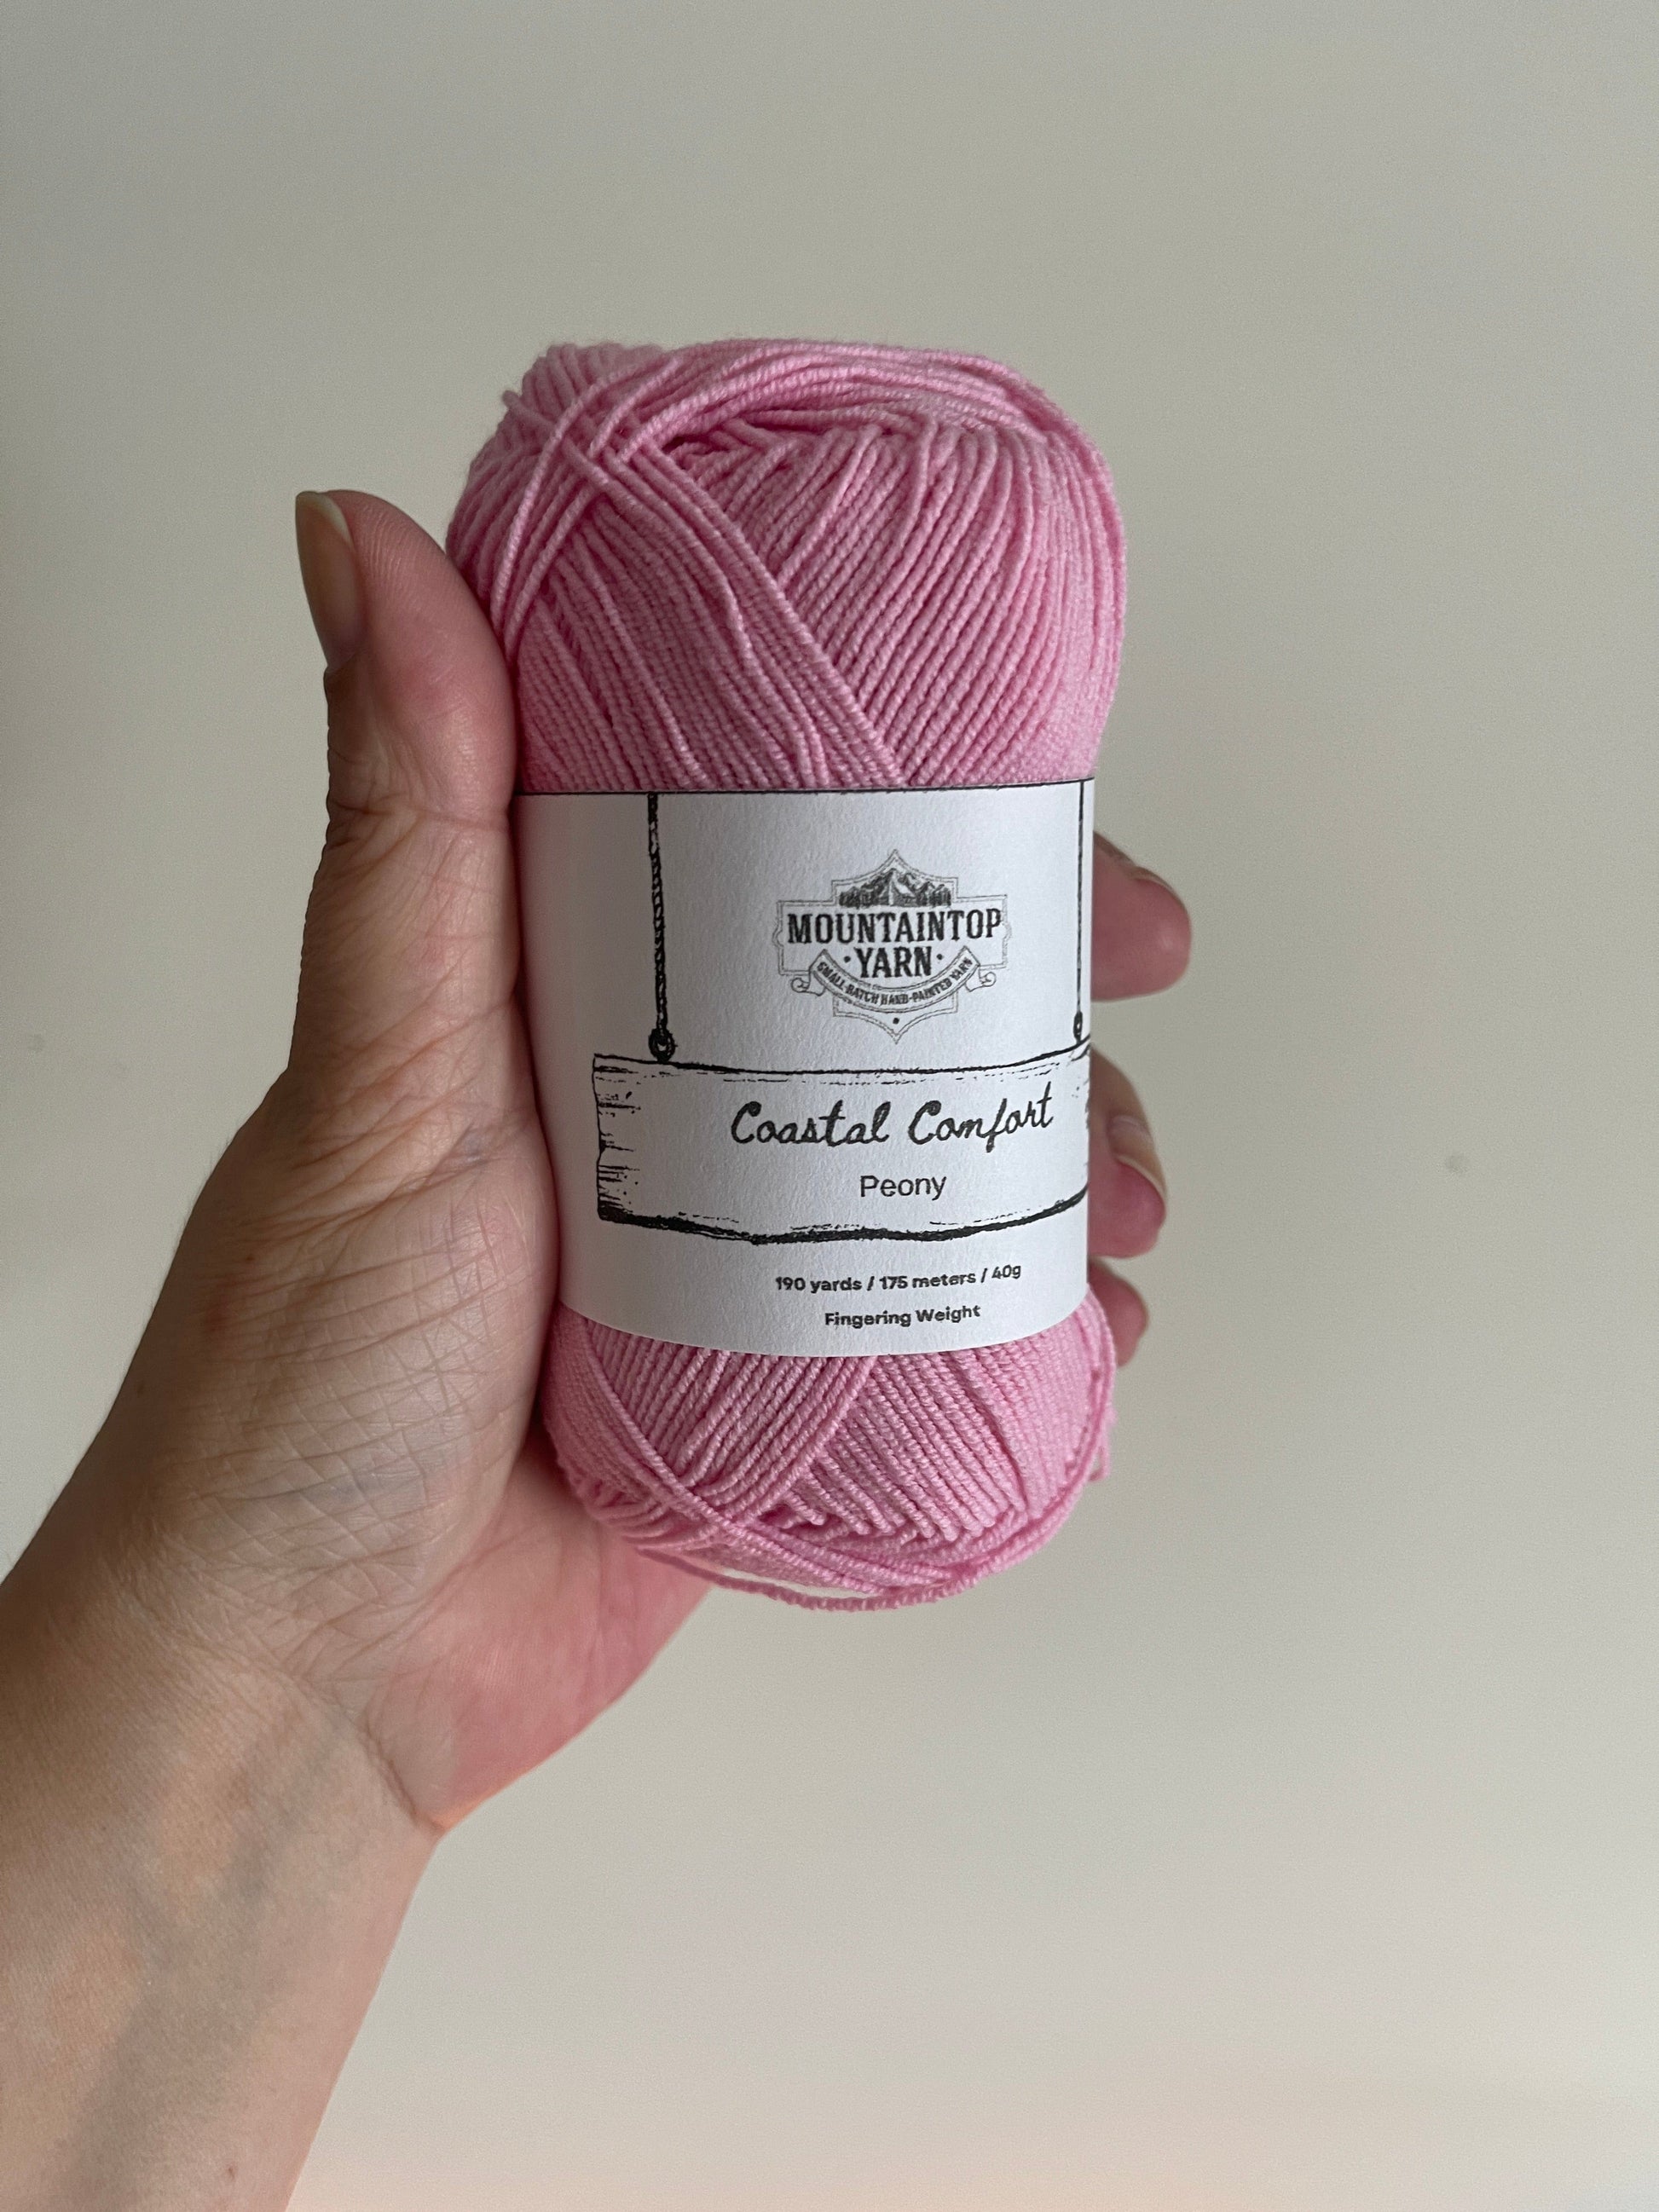 Mountaintop Yarn Peony Coastal Comfort - Cotton and Acrylic Blend Yarn Yarn